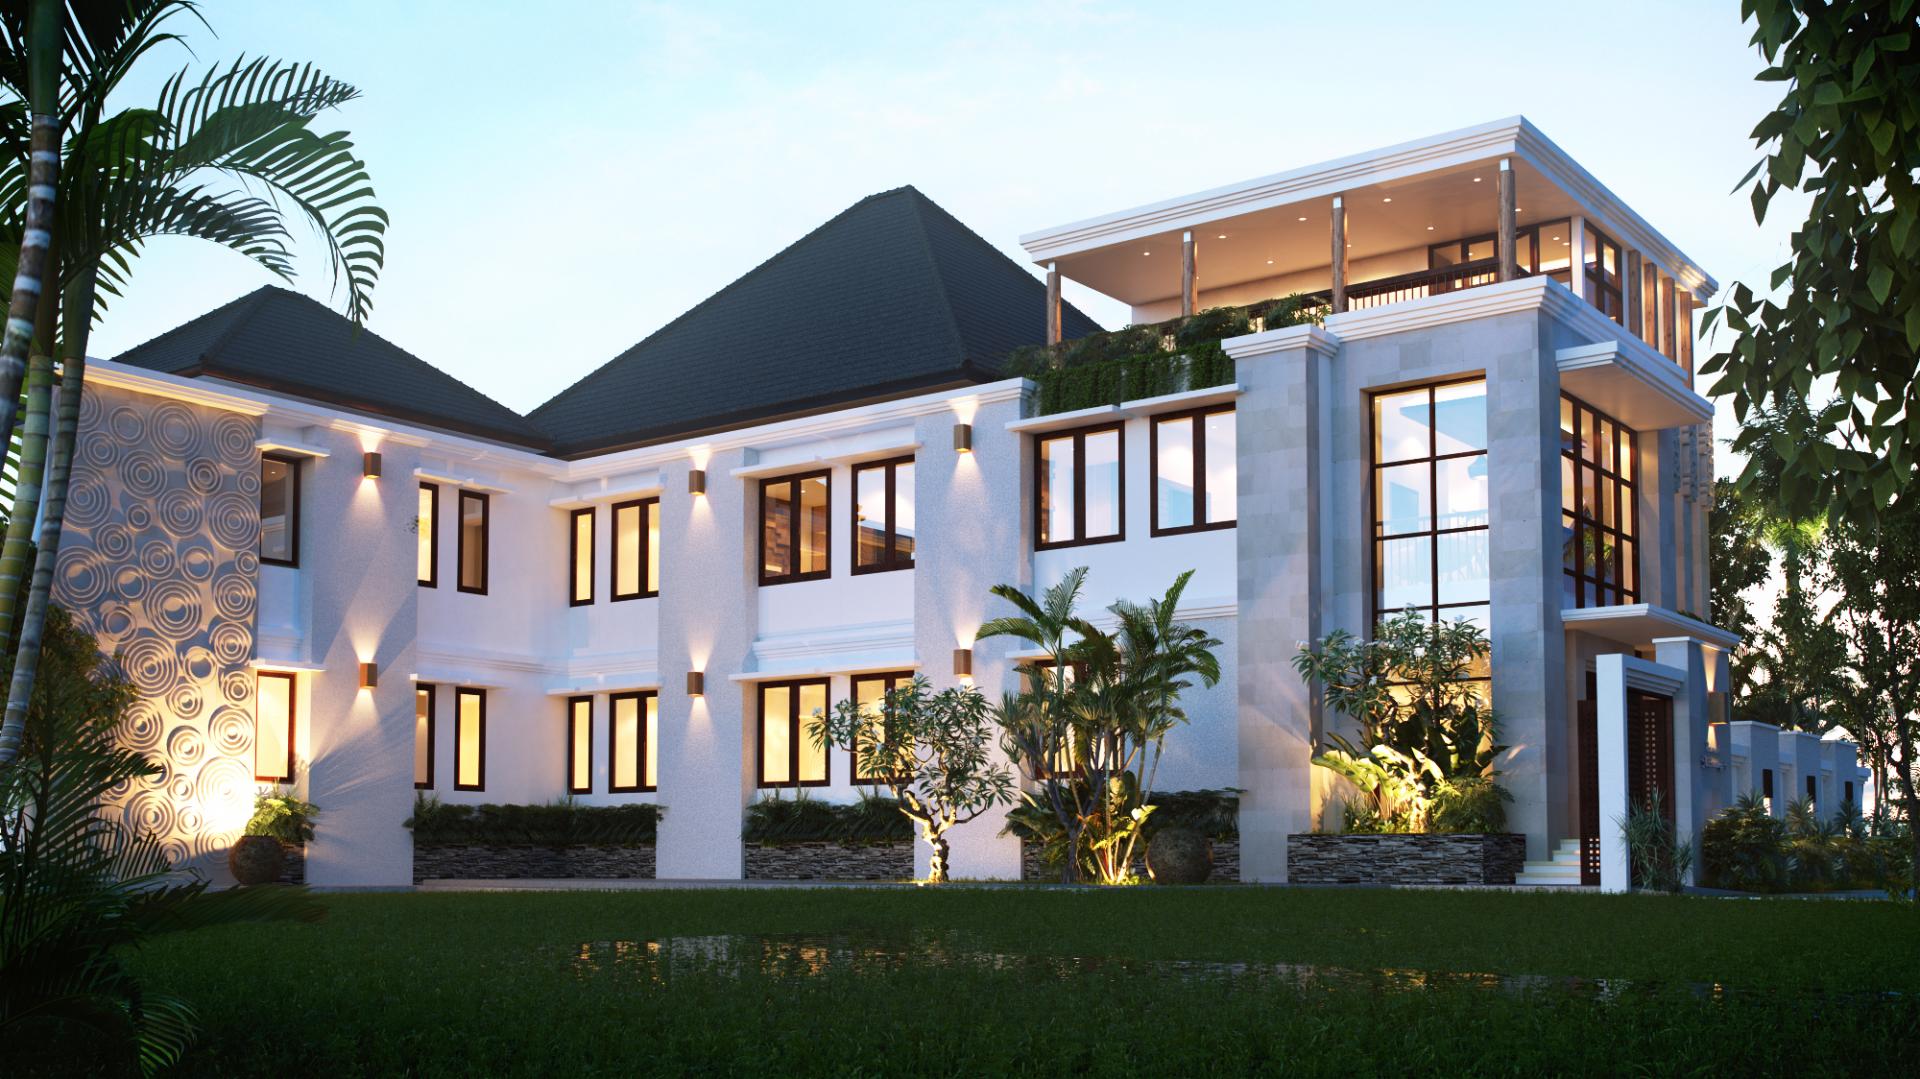 Desain Rumah Kos Modern 3 Lantai Bapak Saichu di Bandung